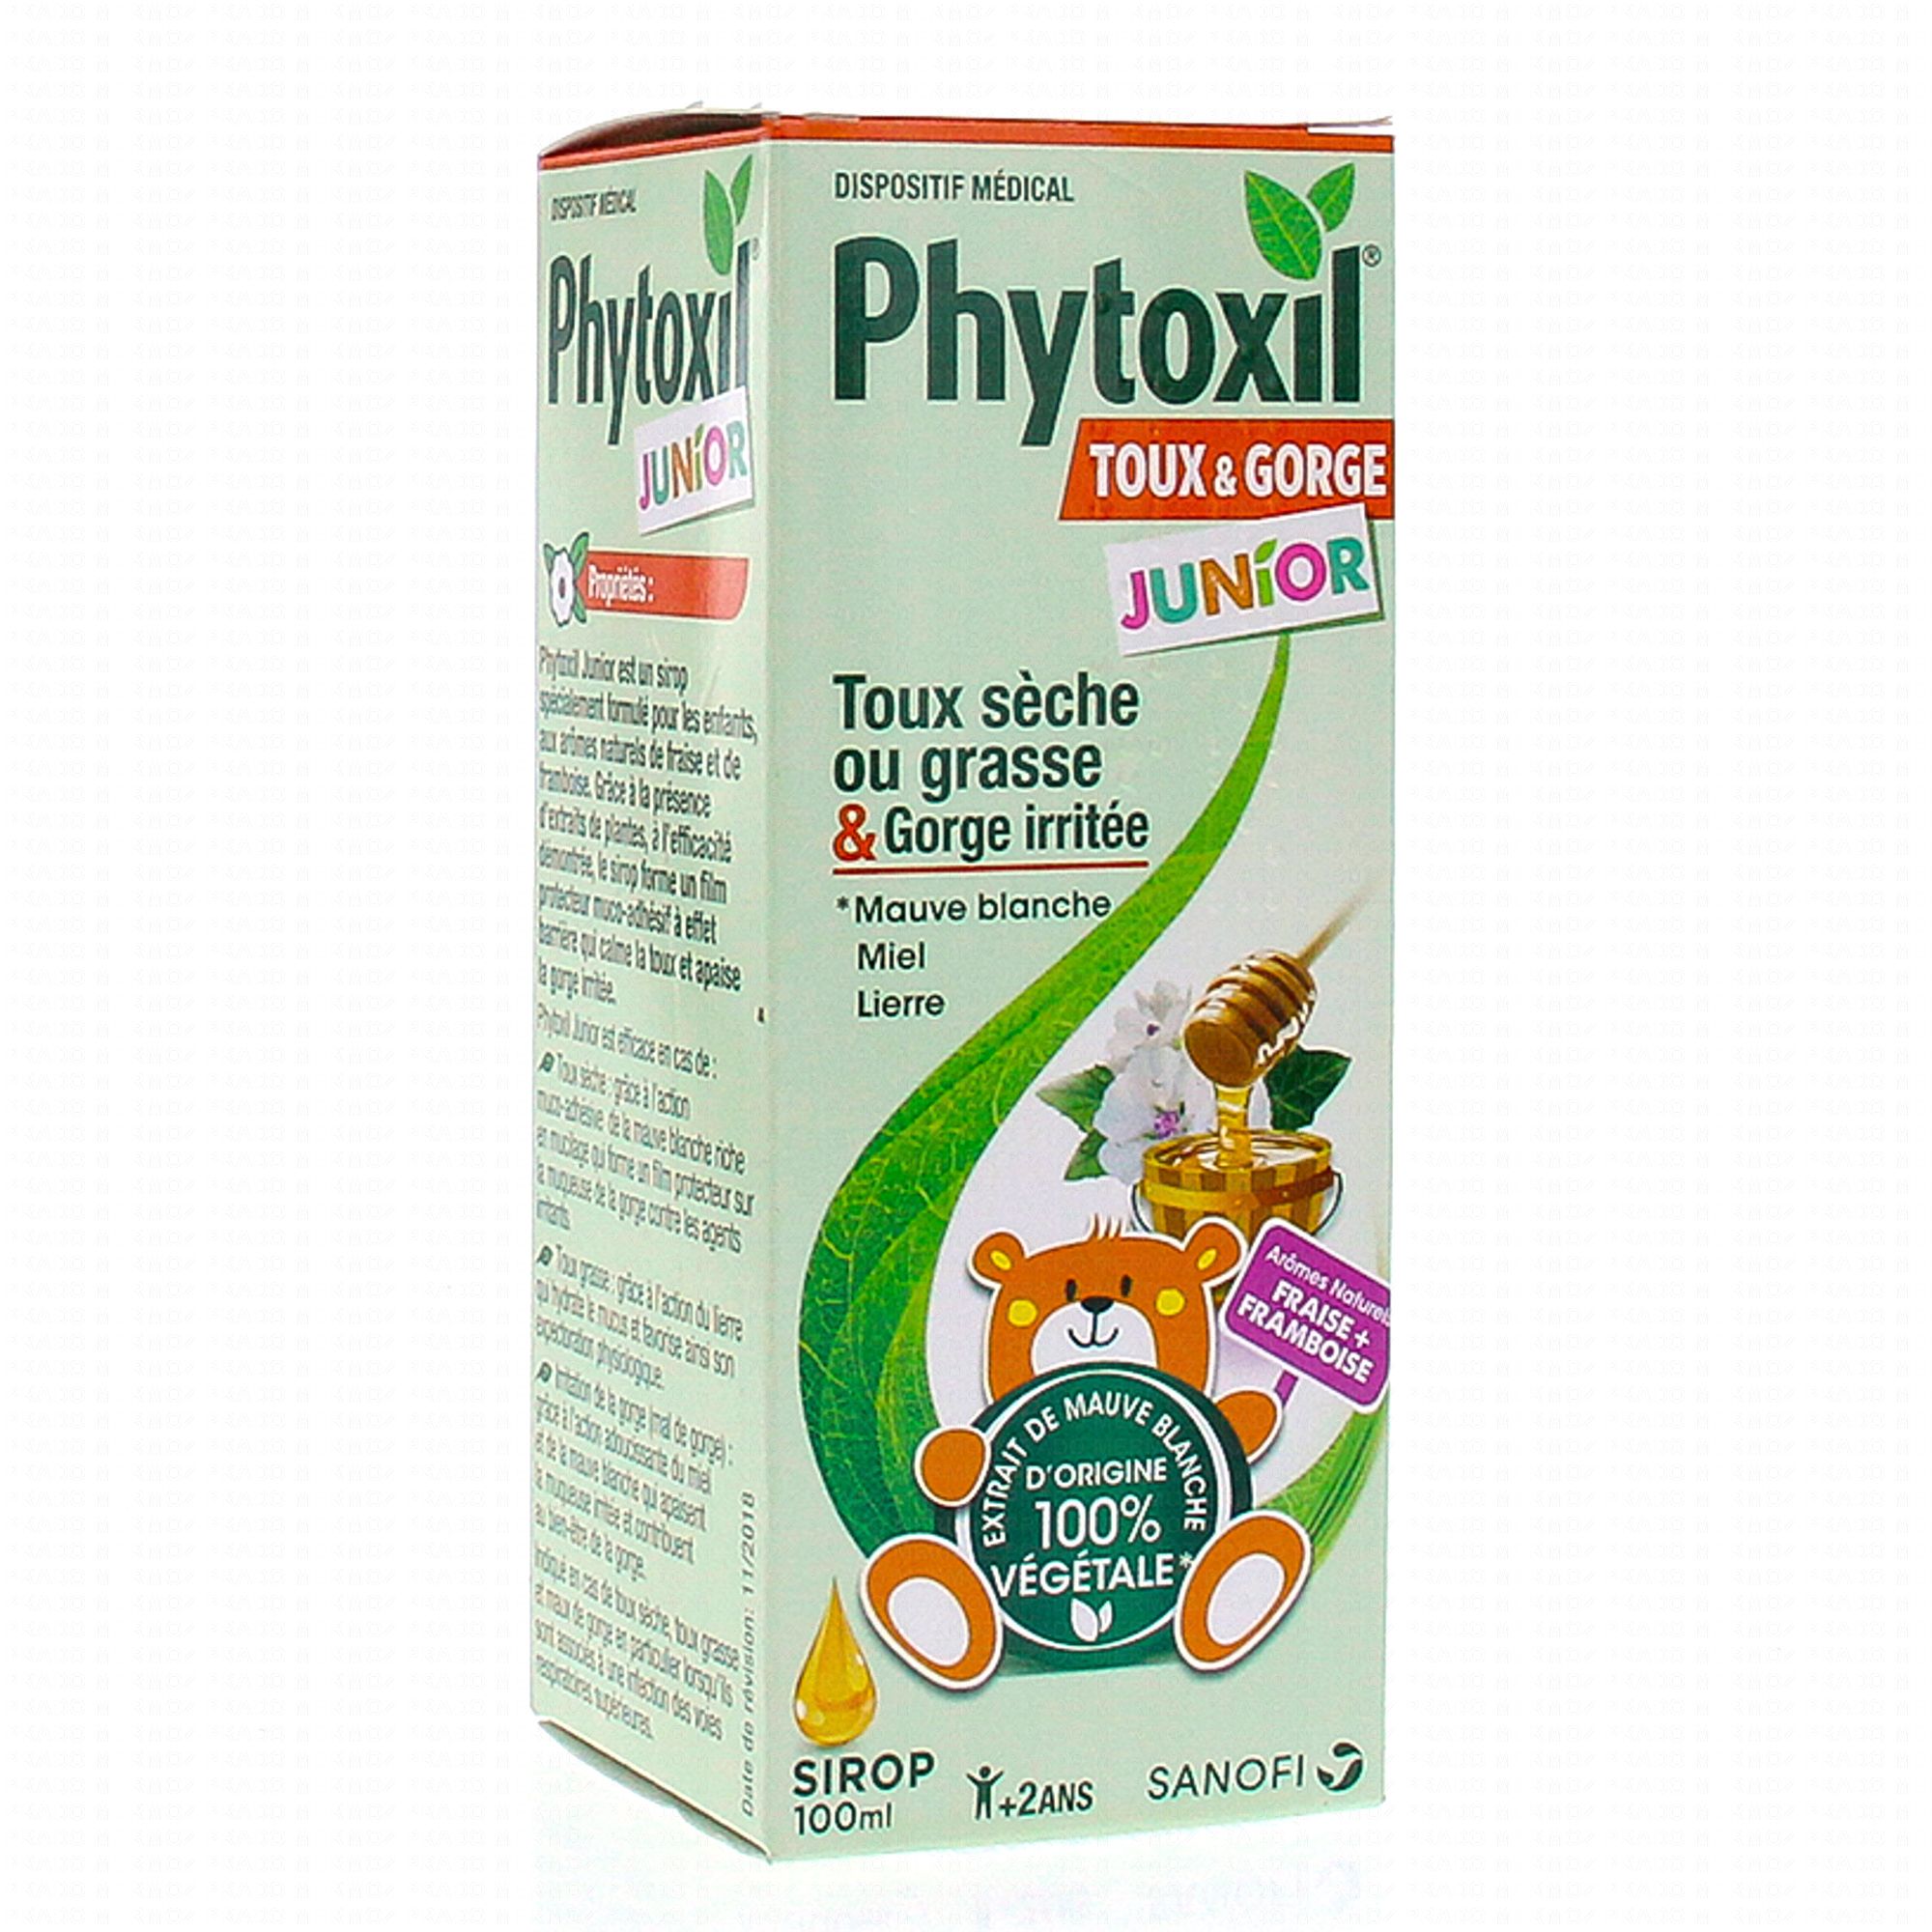 Phytoxil junior mauve blanche lierre miel sirop 100ml